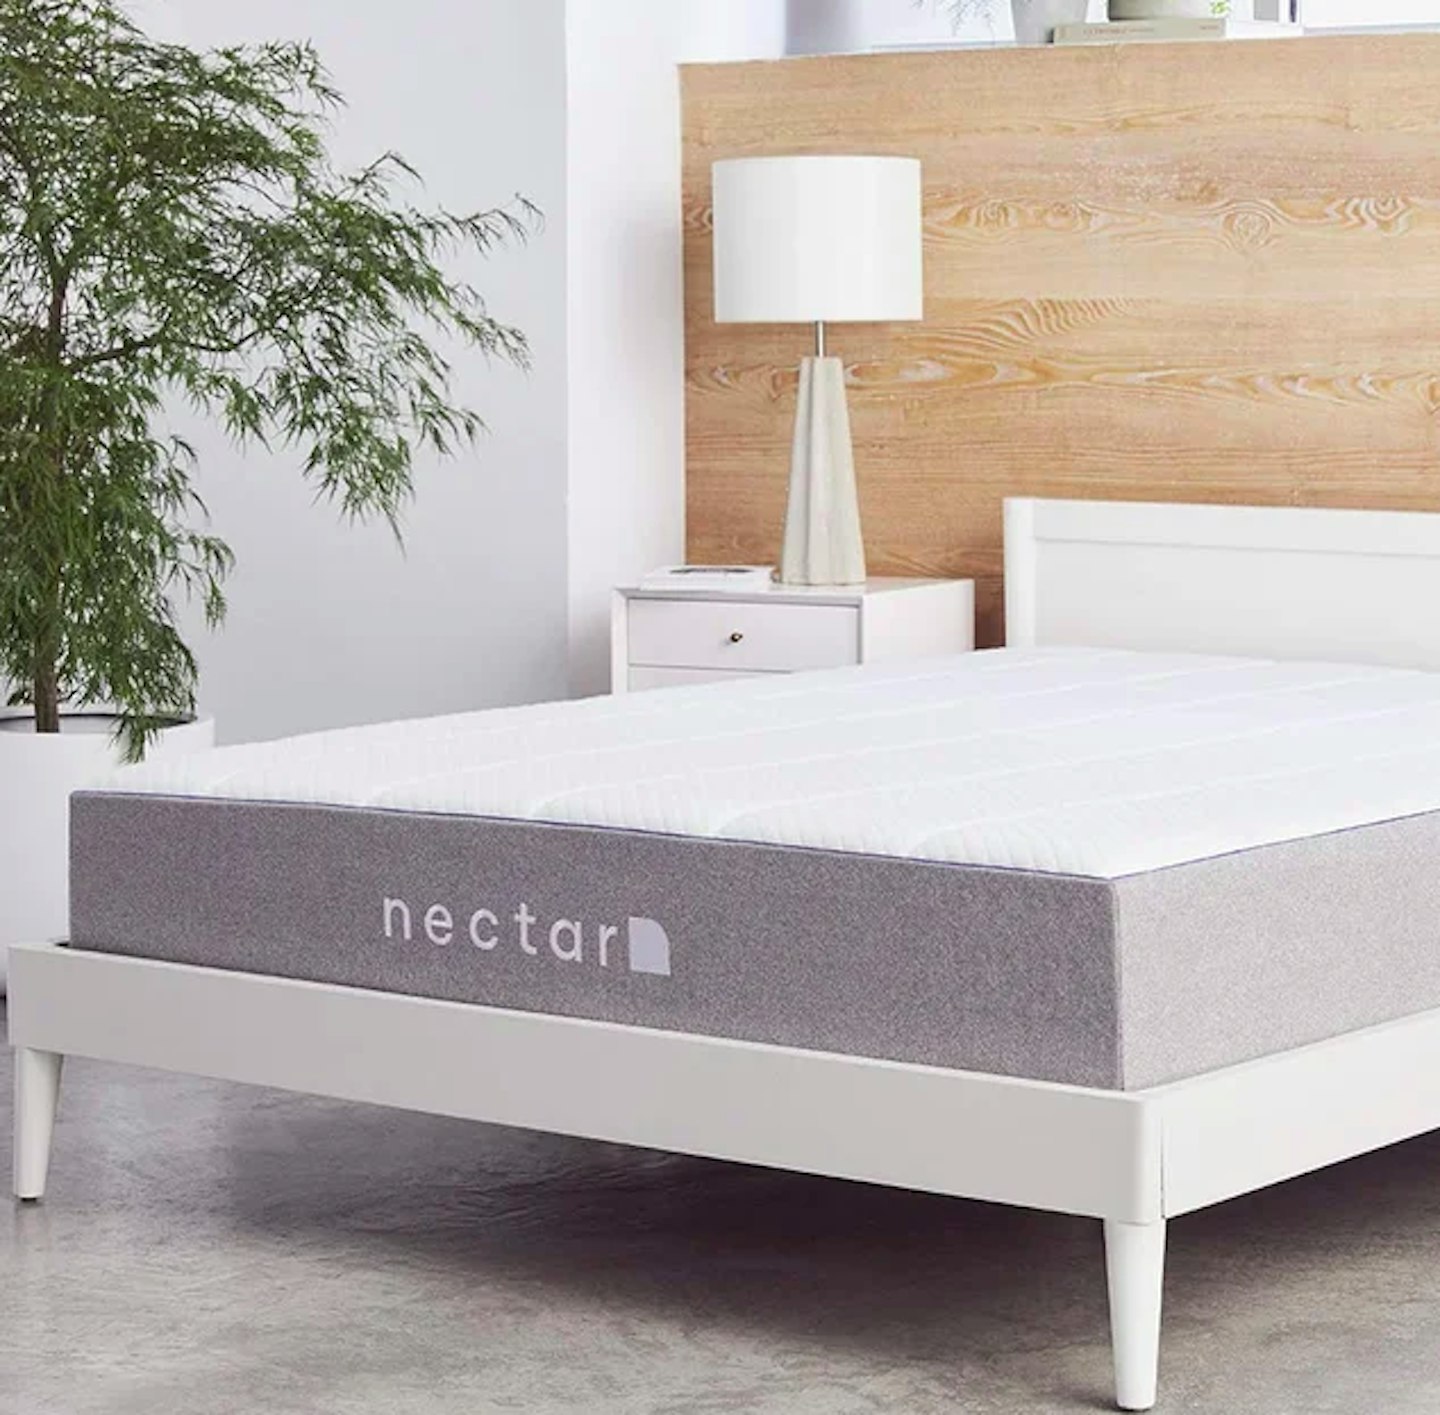 Nectar double memory foam mattress